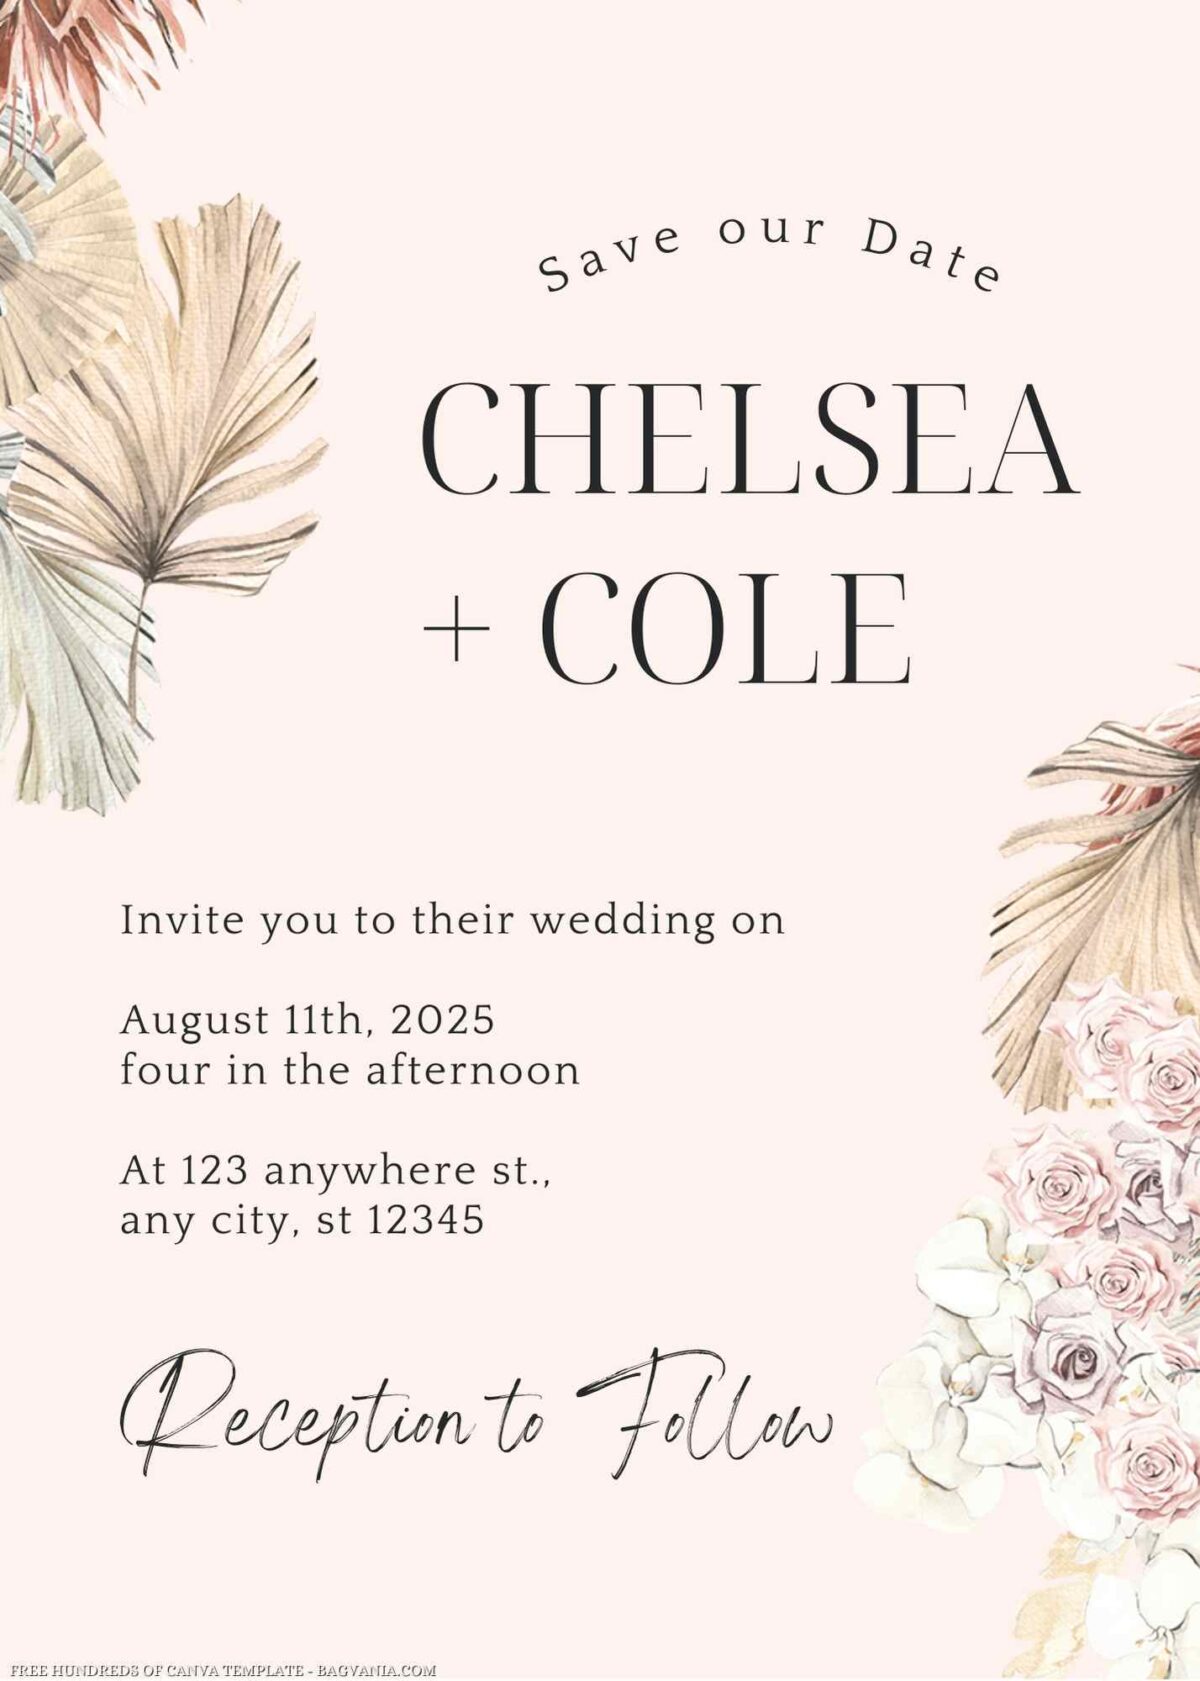 Free Editable Dried Tropical Floral Wedding Invitation